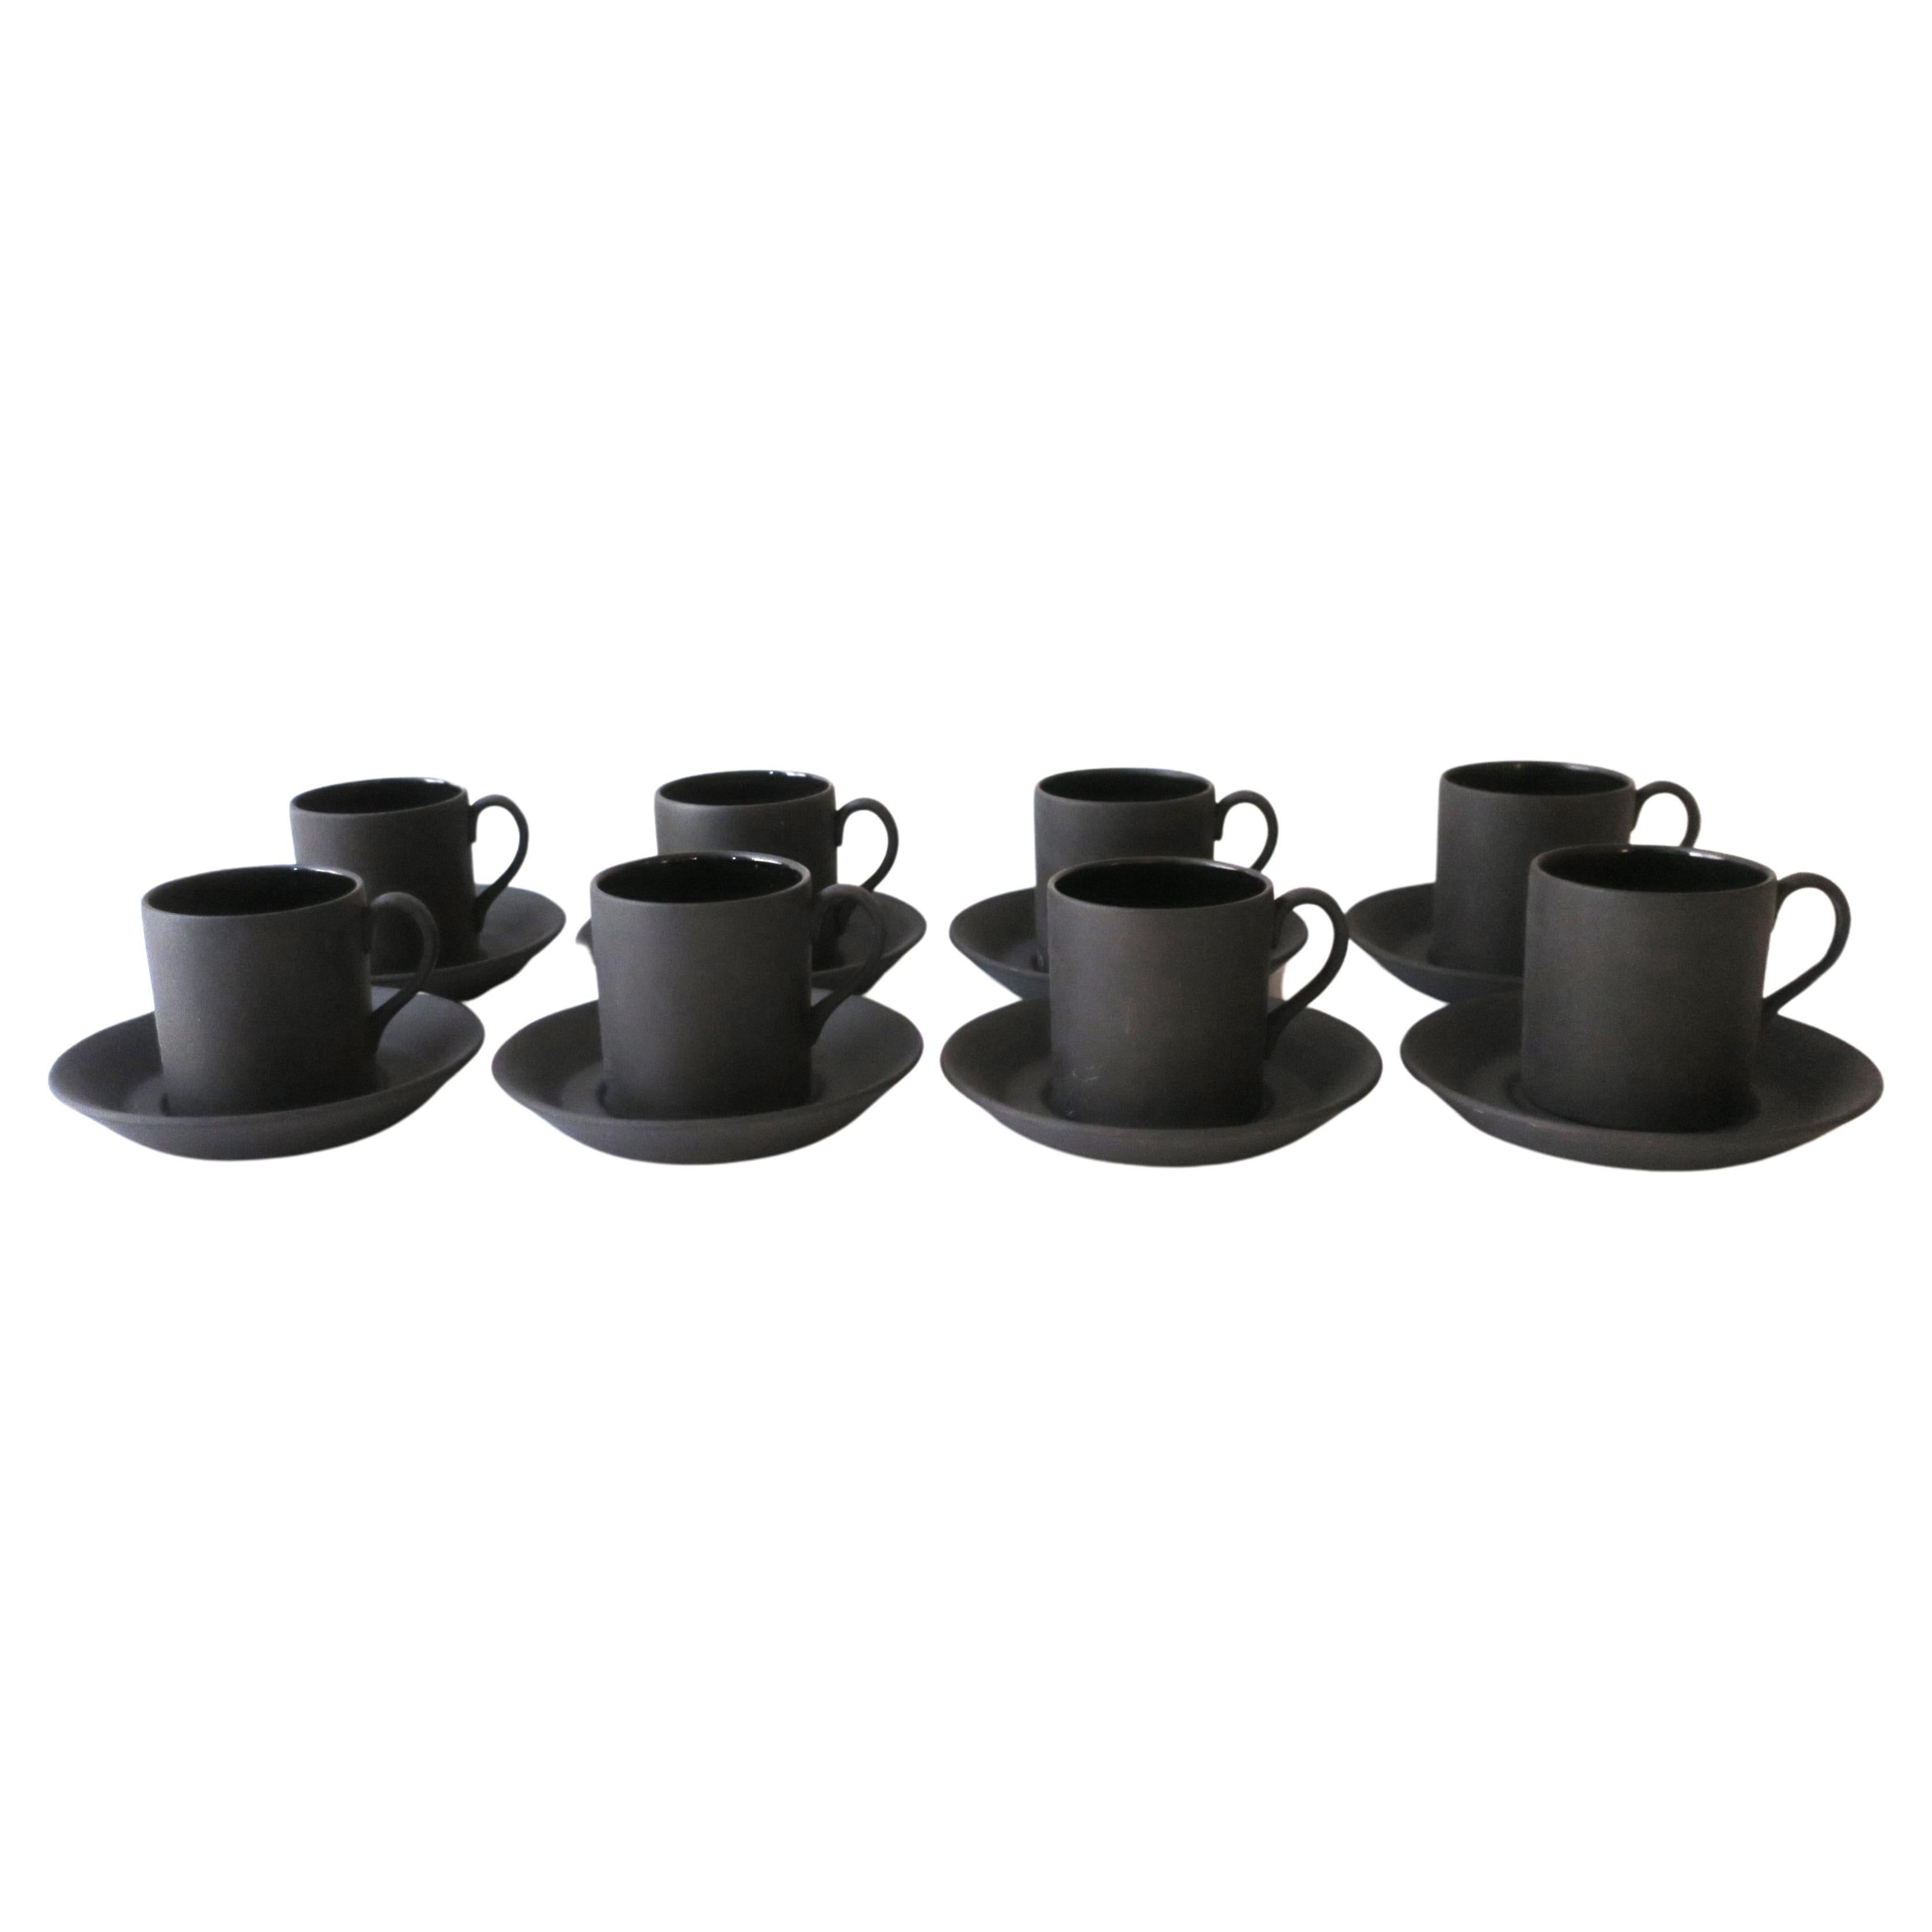 https://a.1stdibscdn.com/wedgwood-matte-black-basalt-espresso-coffee-cup-saucer-1957-england-set-of-8-for-sale/f_13142/f_372403021700867543733/f_37240302_1700867544567_bg_processed.jpg